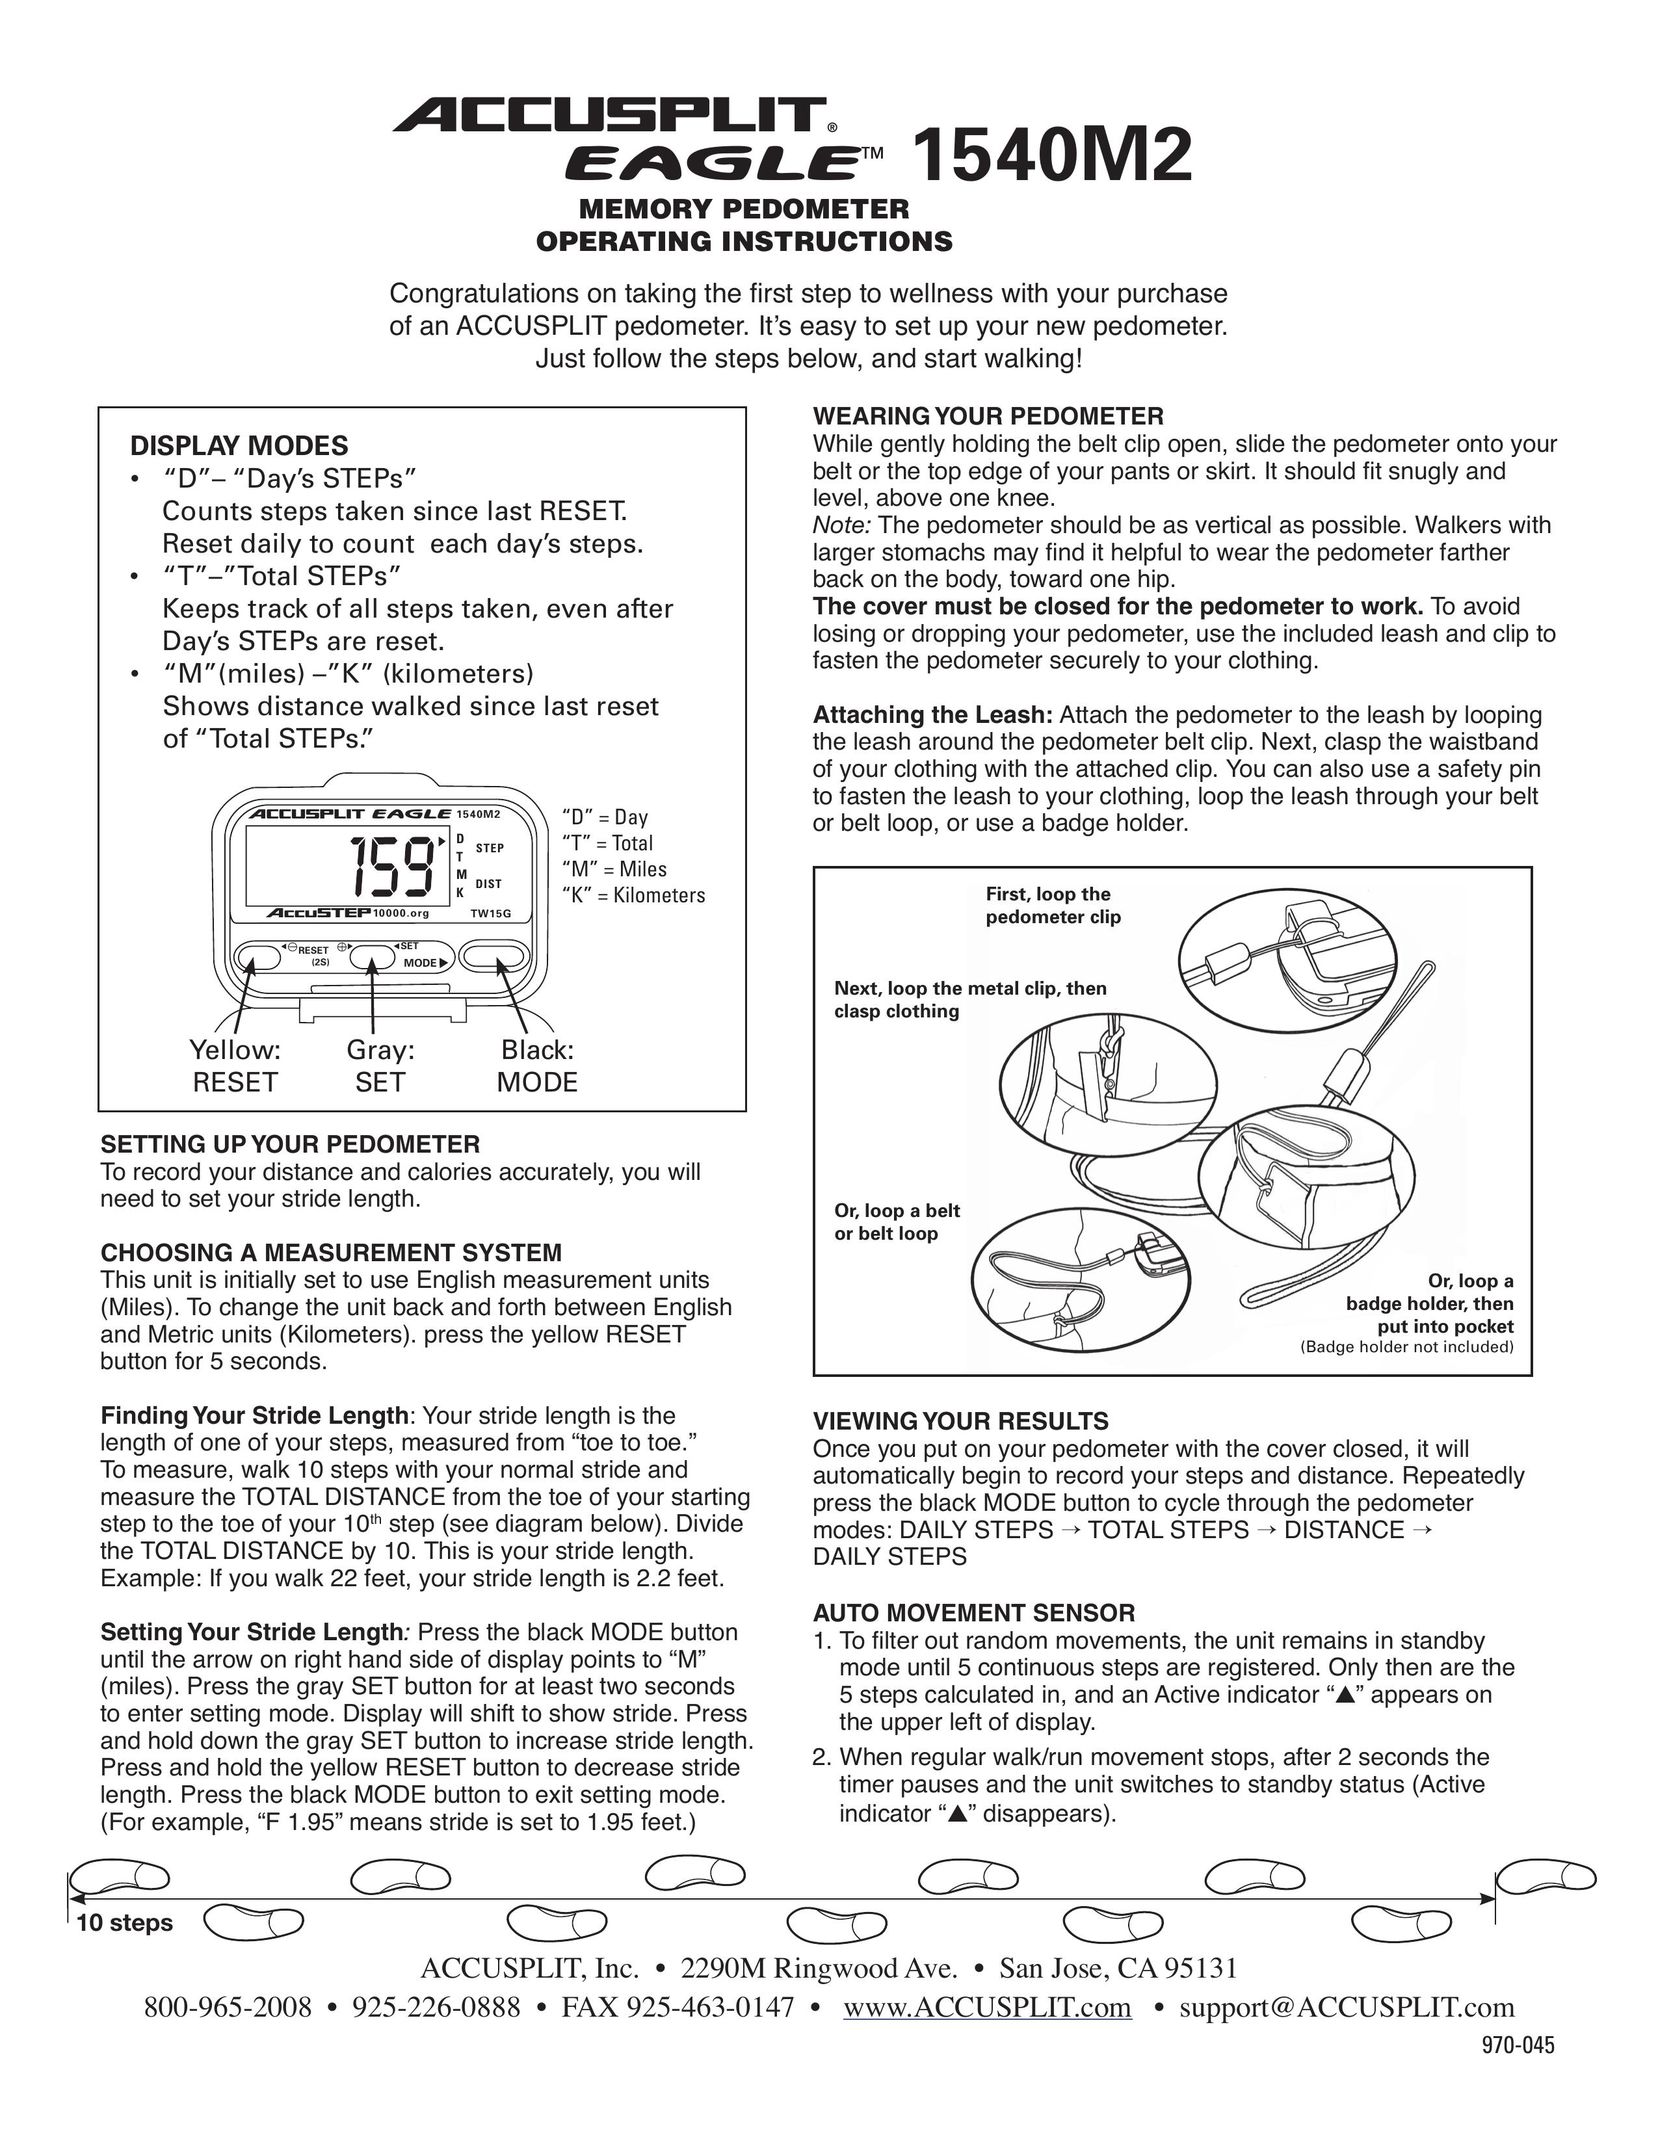 Accusplit AE1540M2 Fitness Electronics User Manual